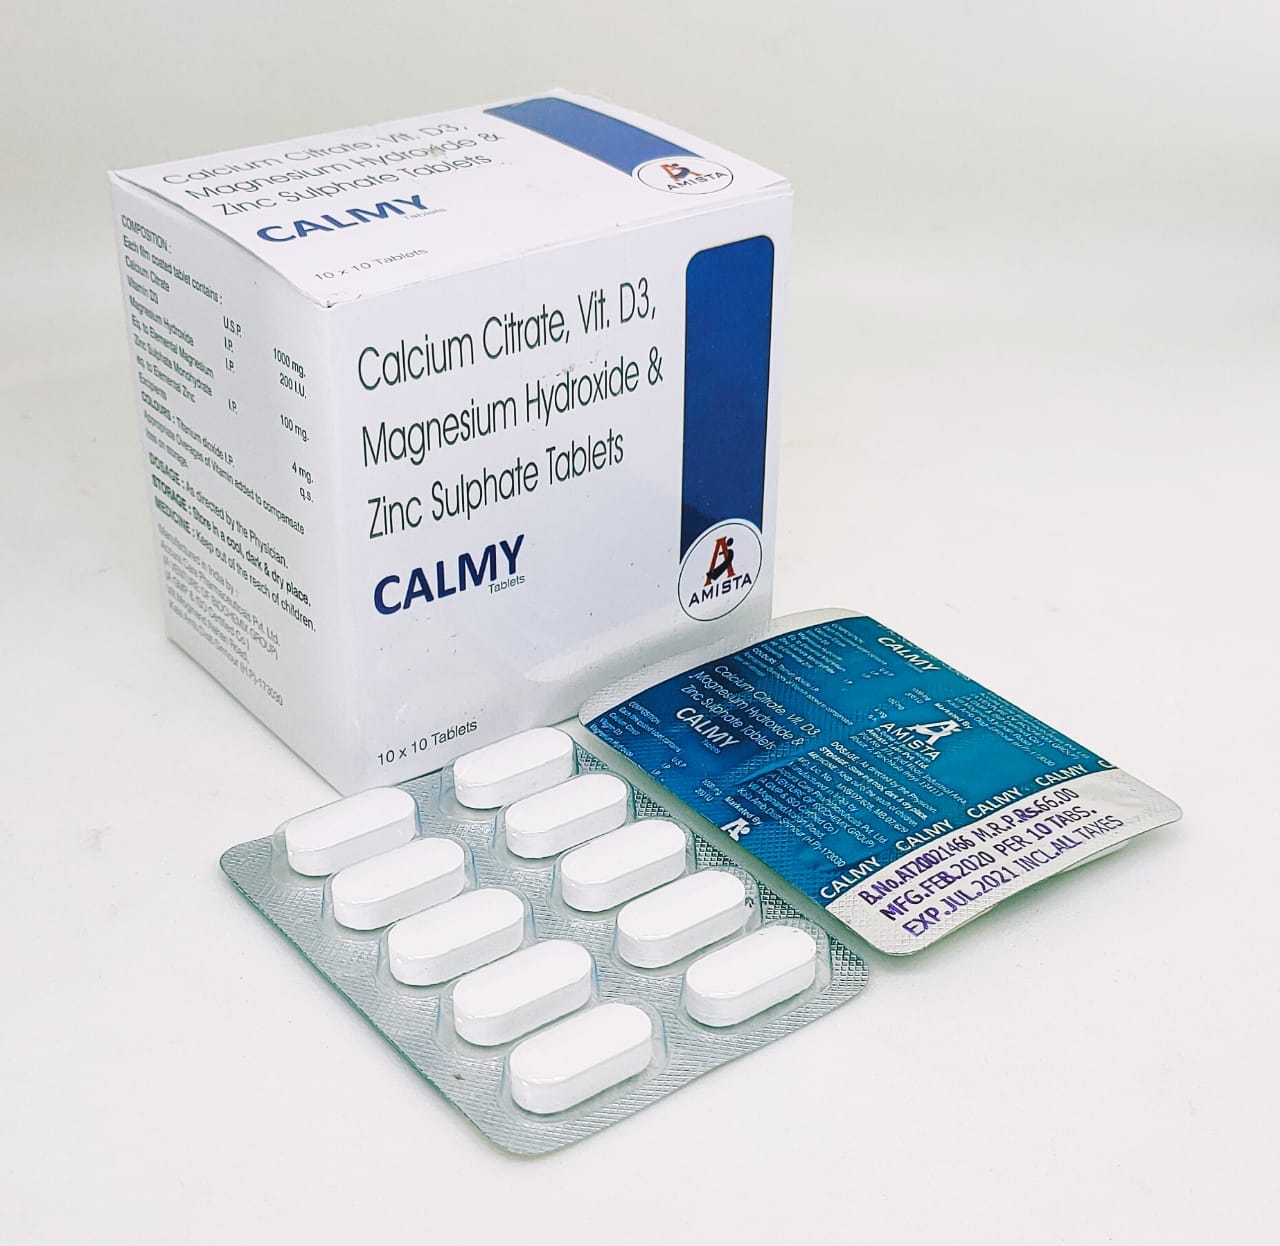 CALMY-TAB Tablets